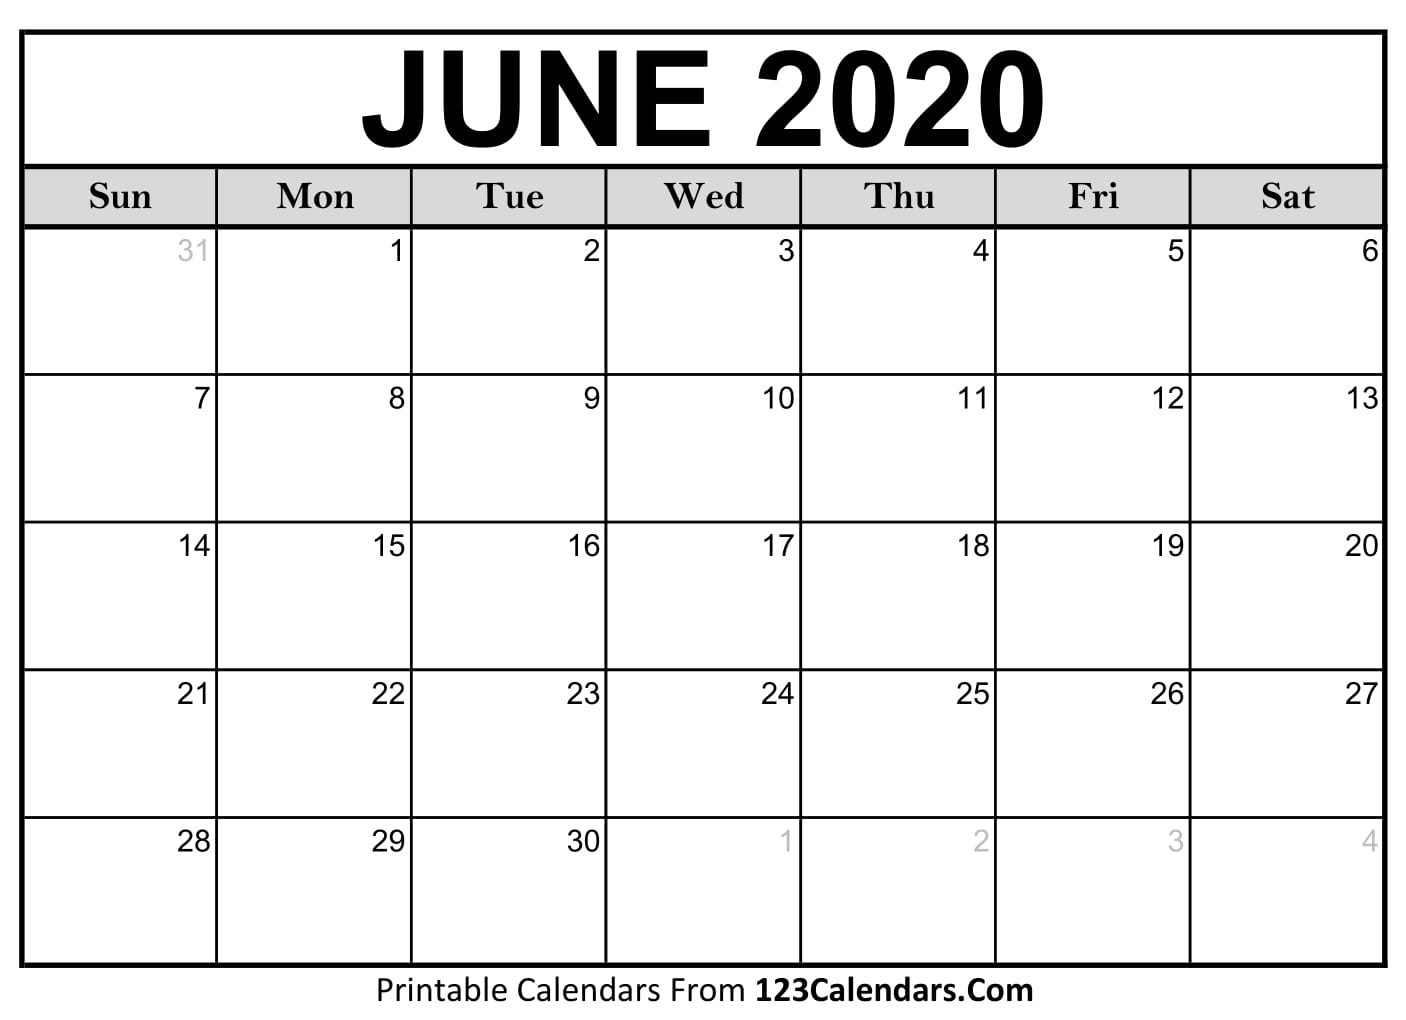 June 2020 Printable Calendar | 123Calendars-Calendar 2020 Monthly Business And Next Month